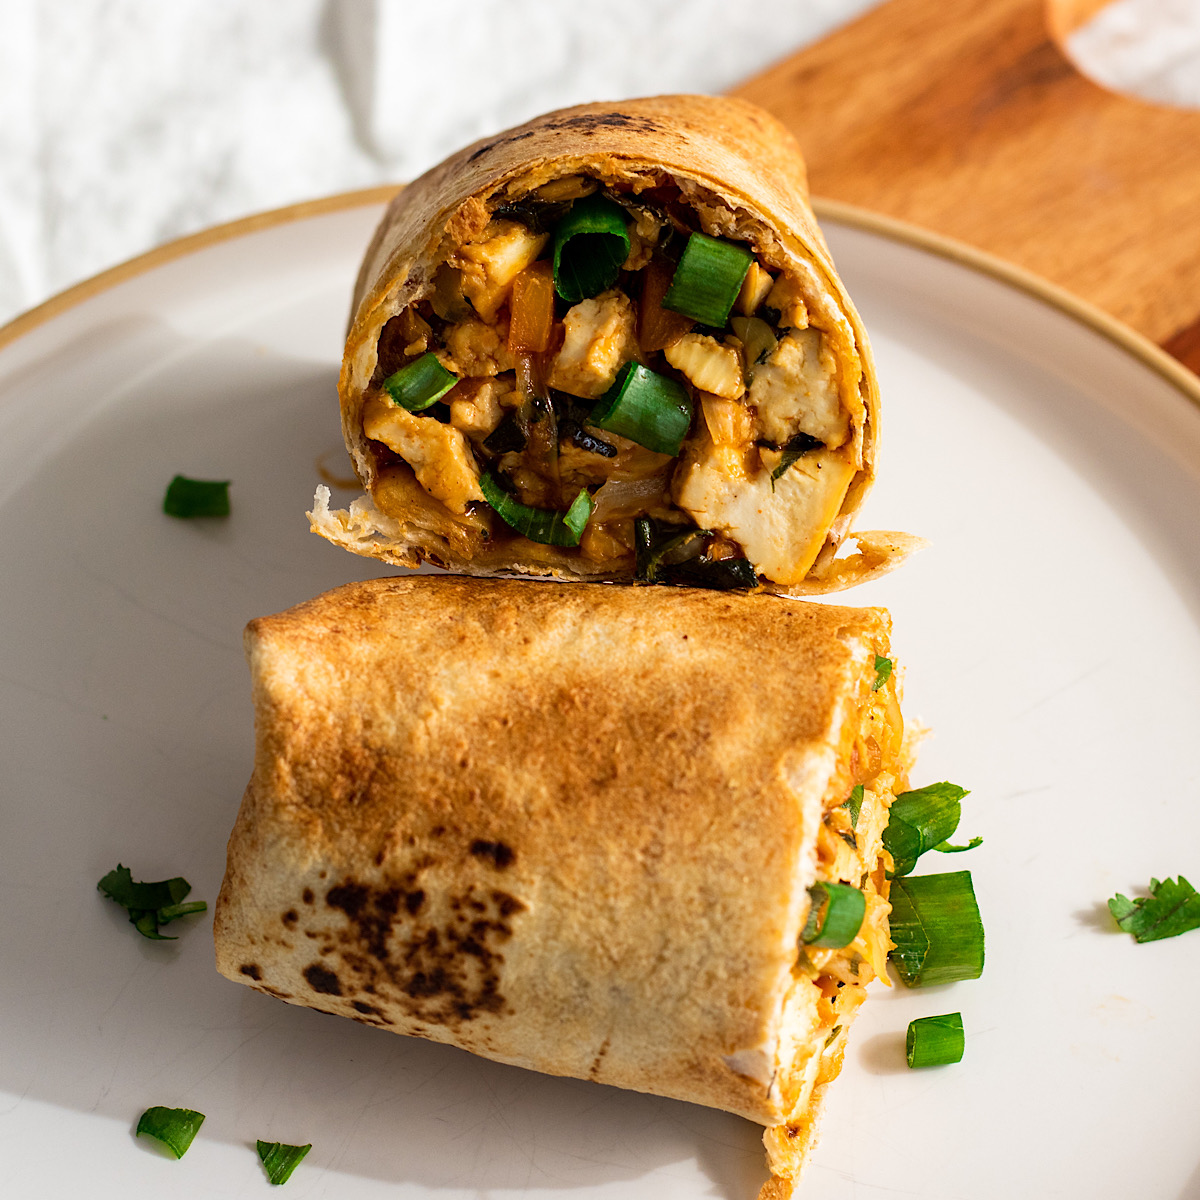 vegan egg roll burrito with tofu